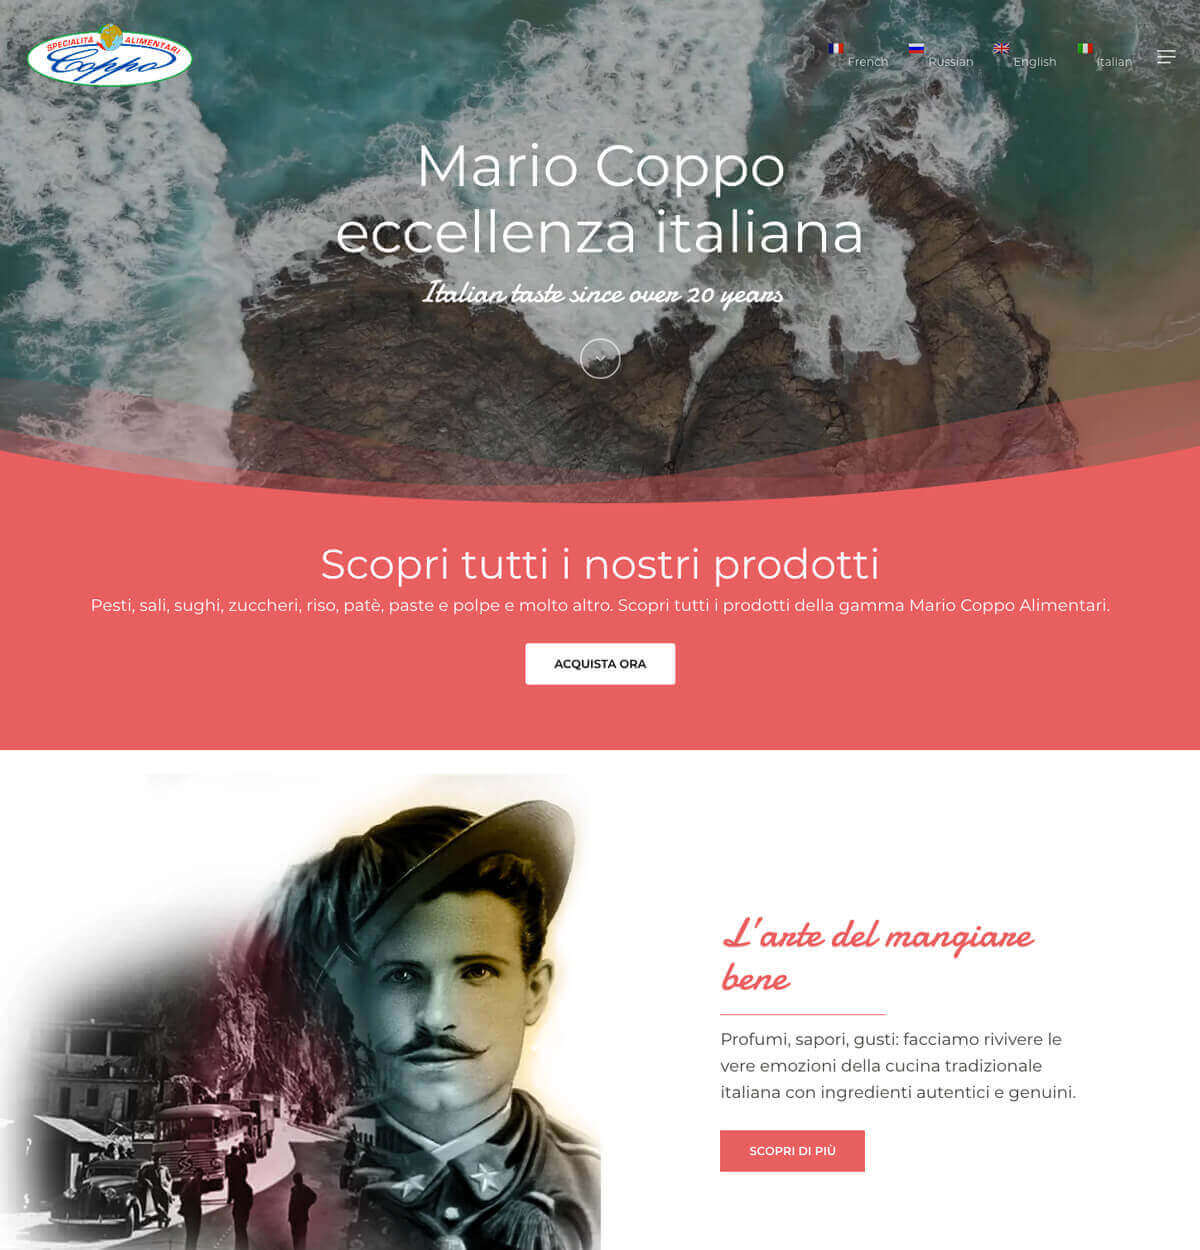 Coppo Alimentari Website